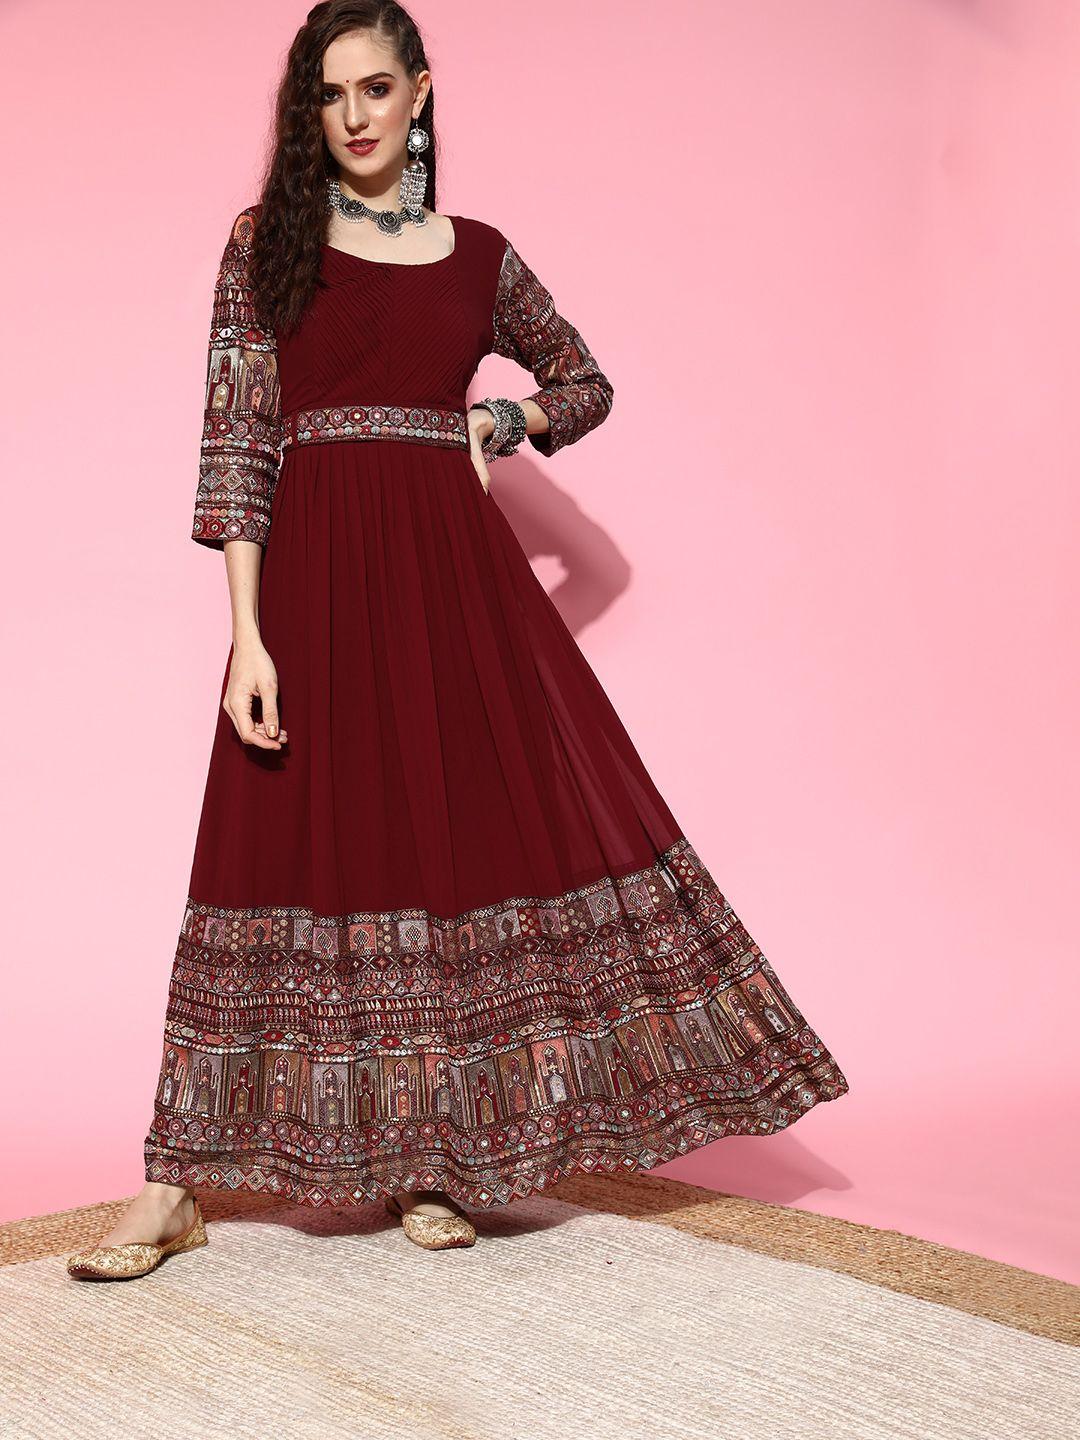 kvsfab-women-charming-maroon-ethnic-motifs-gown-for-days